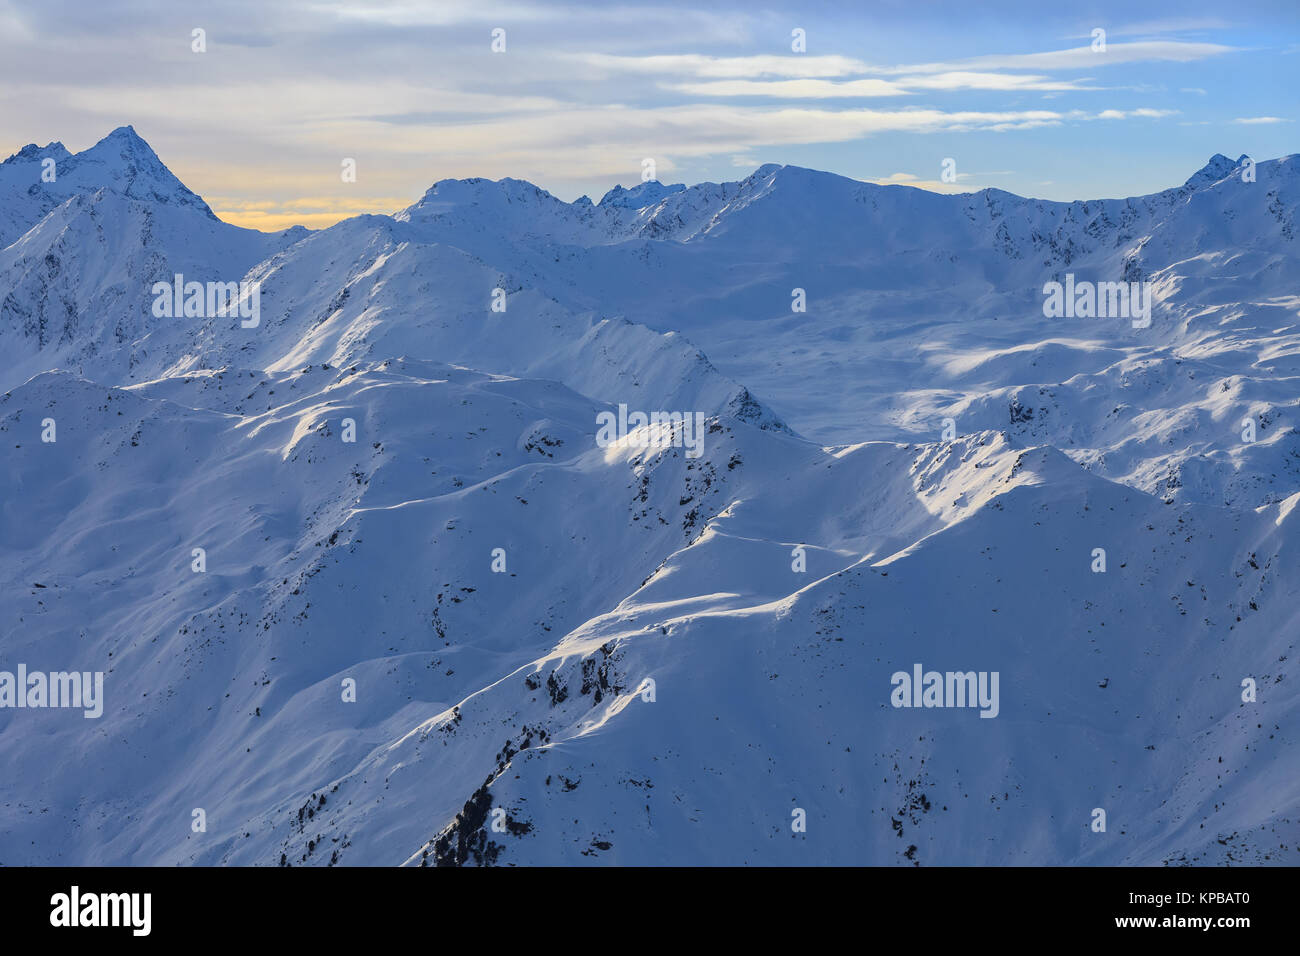 winter mountain landscape. Region Axamer Lizum, Austria Stock Photo